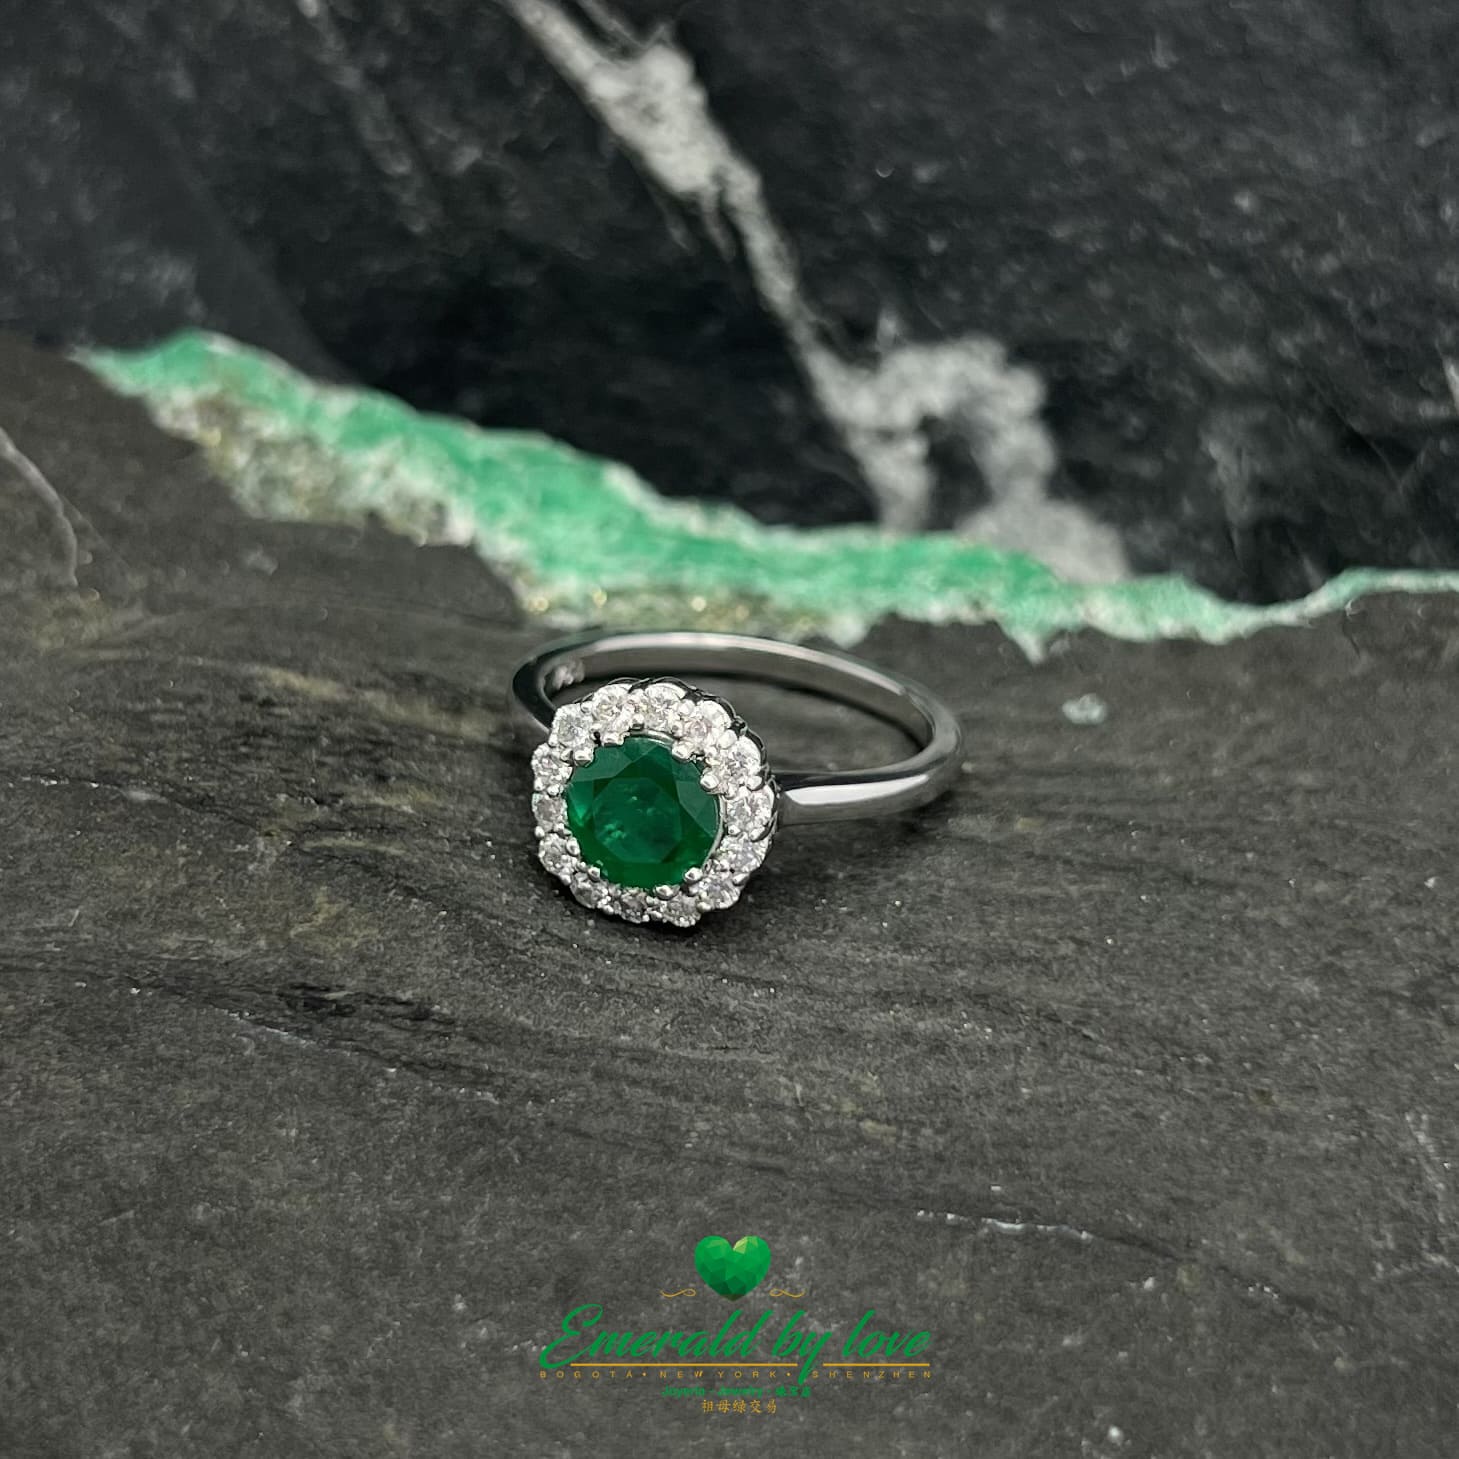 White Gold Marquise Emerald Ring with Round Dark Green Emerald and Diamond Surround